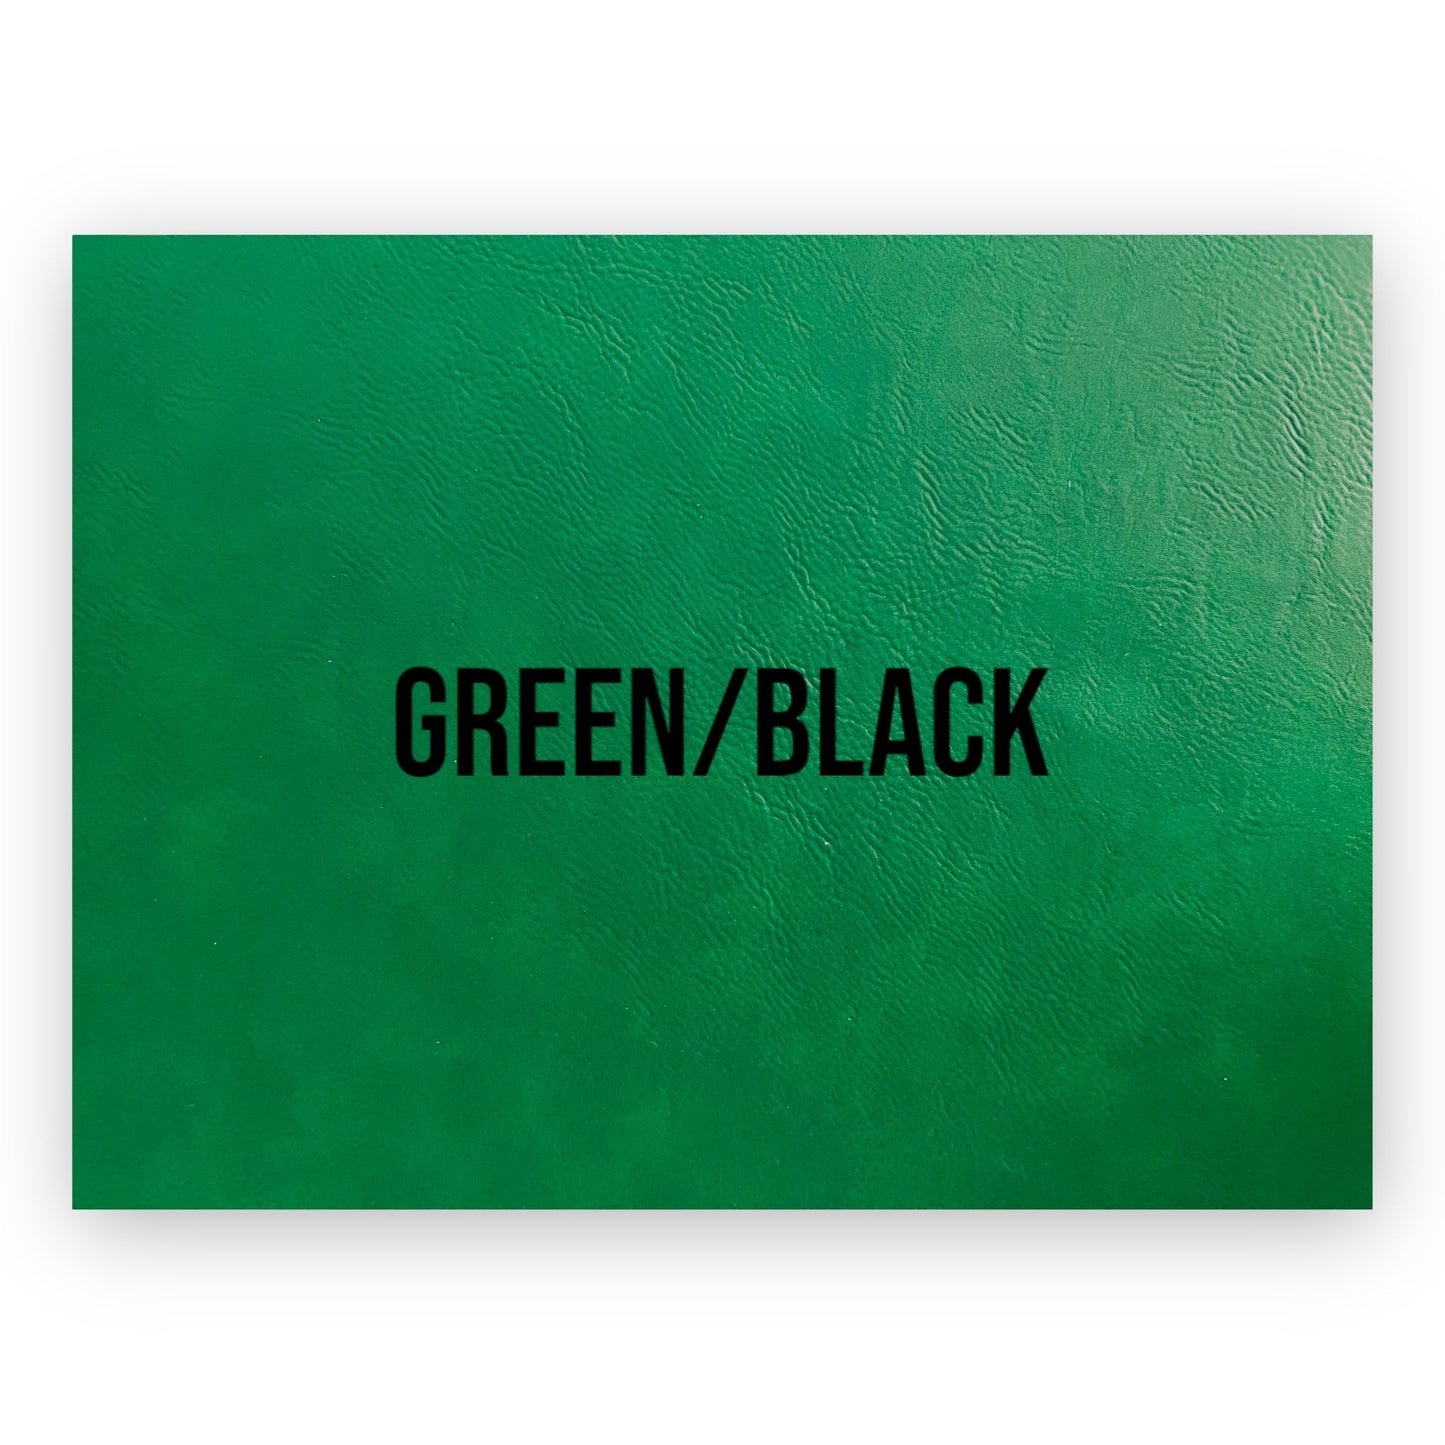 NO ADHESIVE GREEN/BLACK LEATHERETTE SHEET (12"x24")